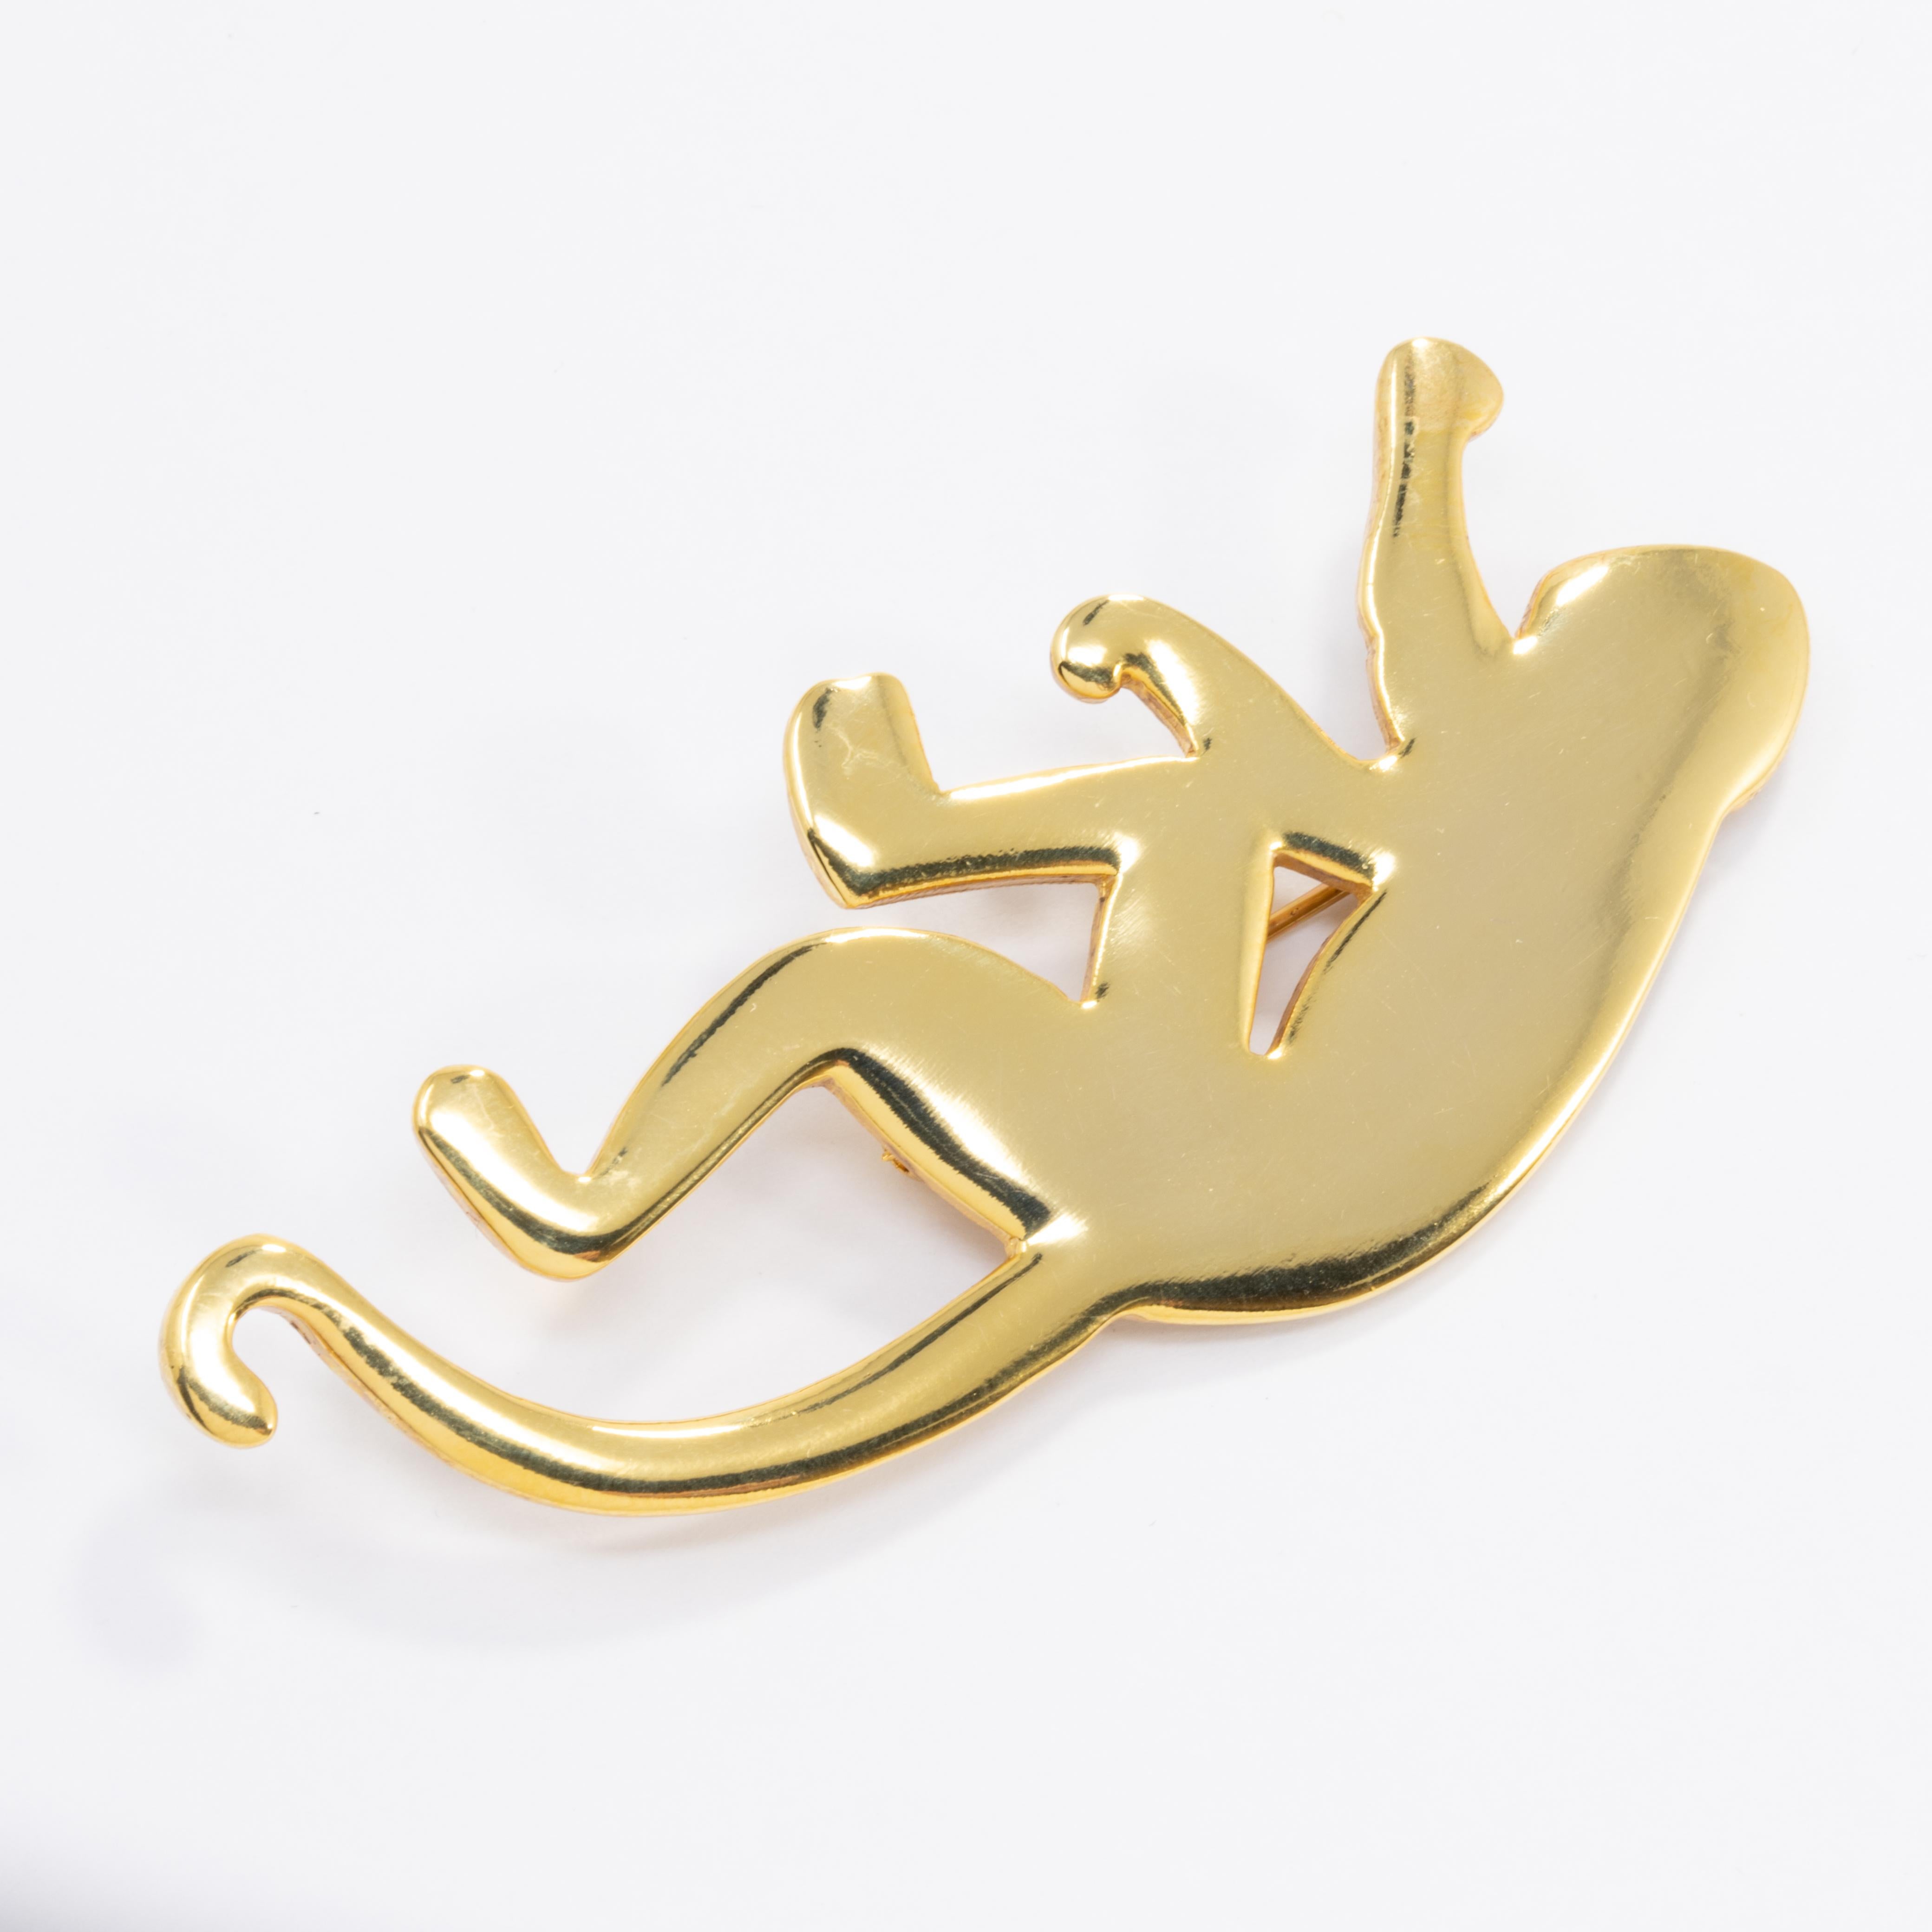 Oscar de la Renta's gold-tone brass monkey brooch. A perfect touch to any style!

Hallmarks: Oscar de la Renta, Made in USA